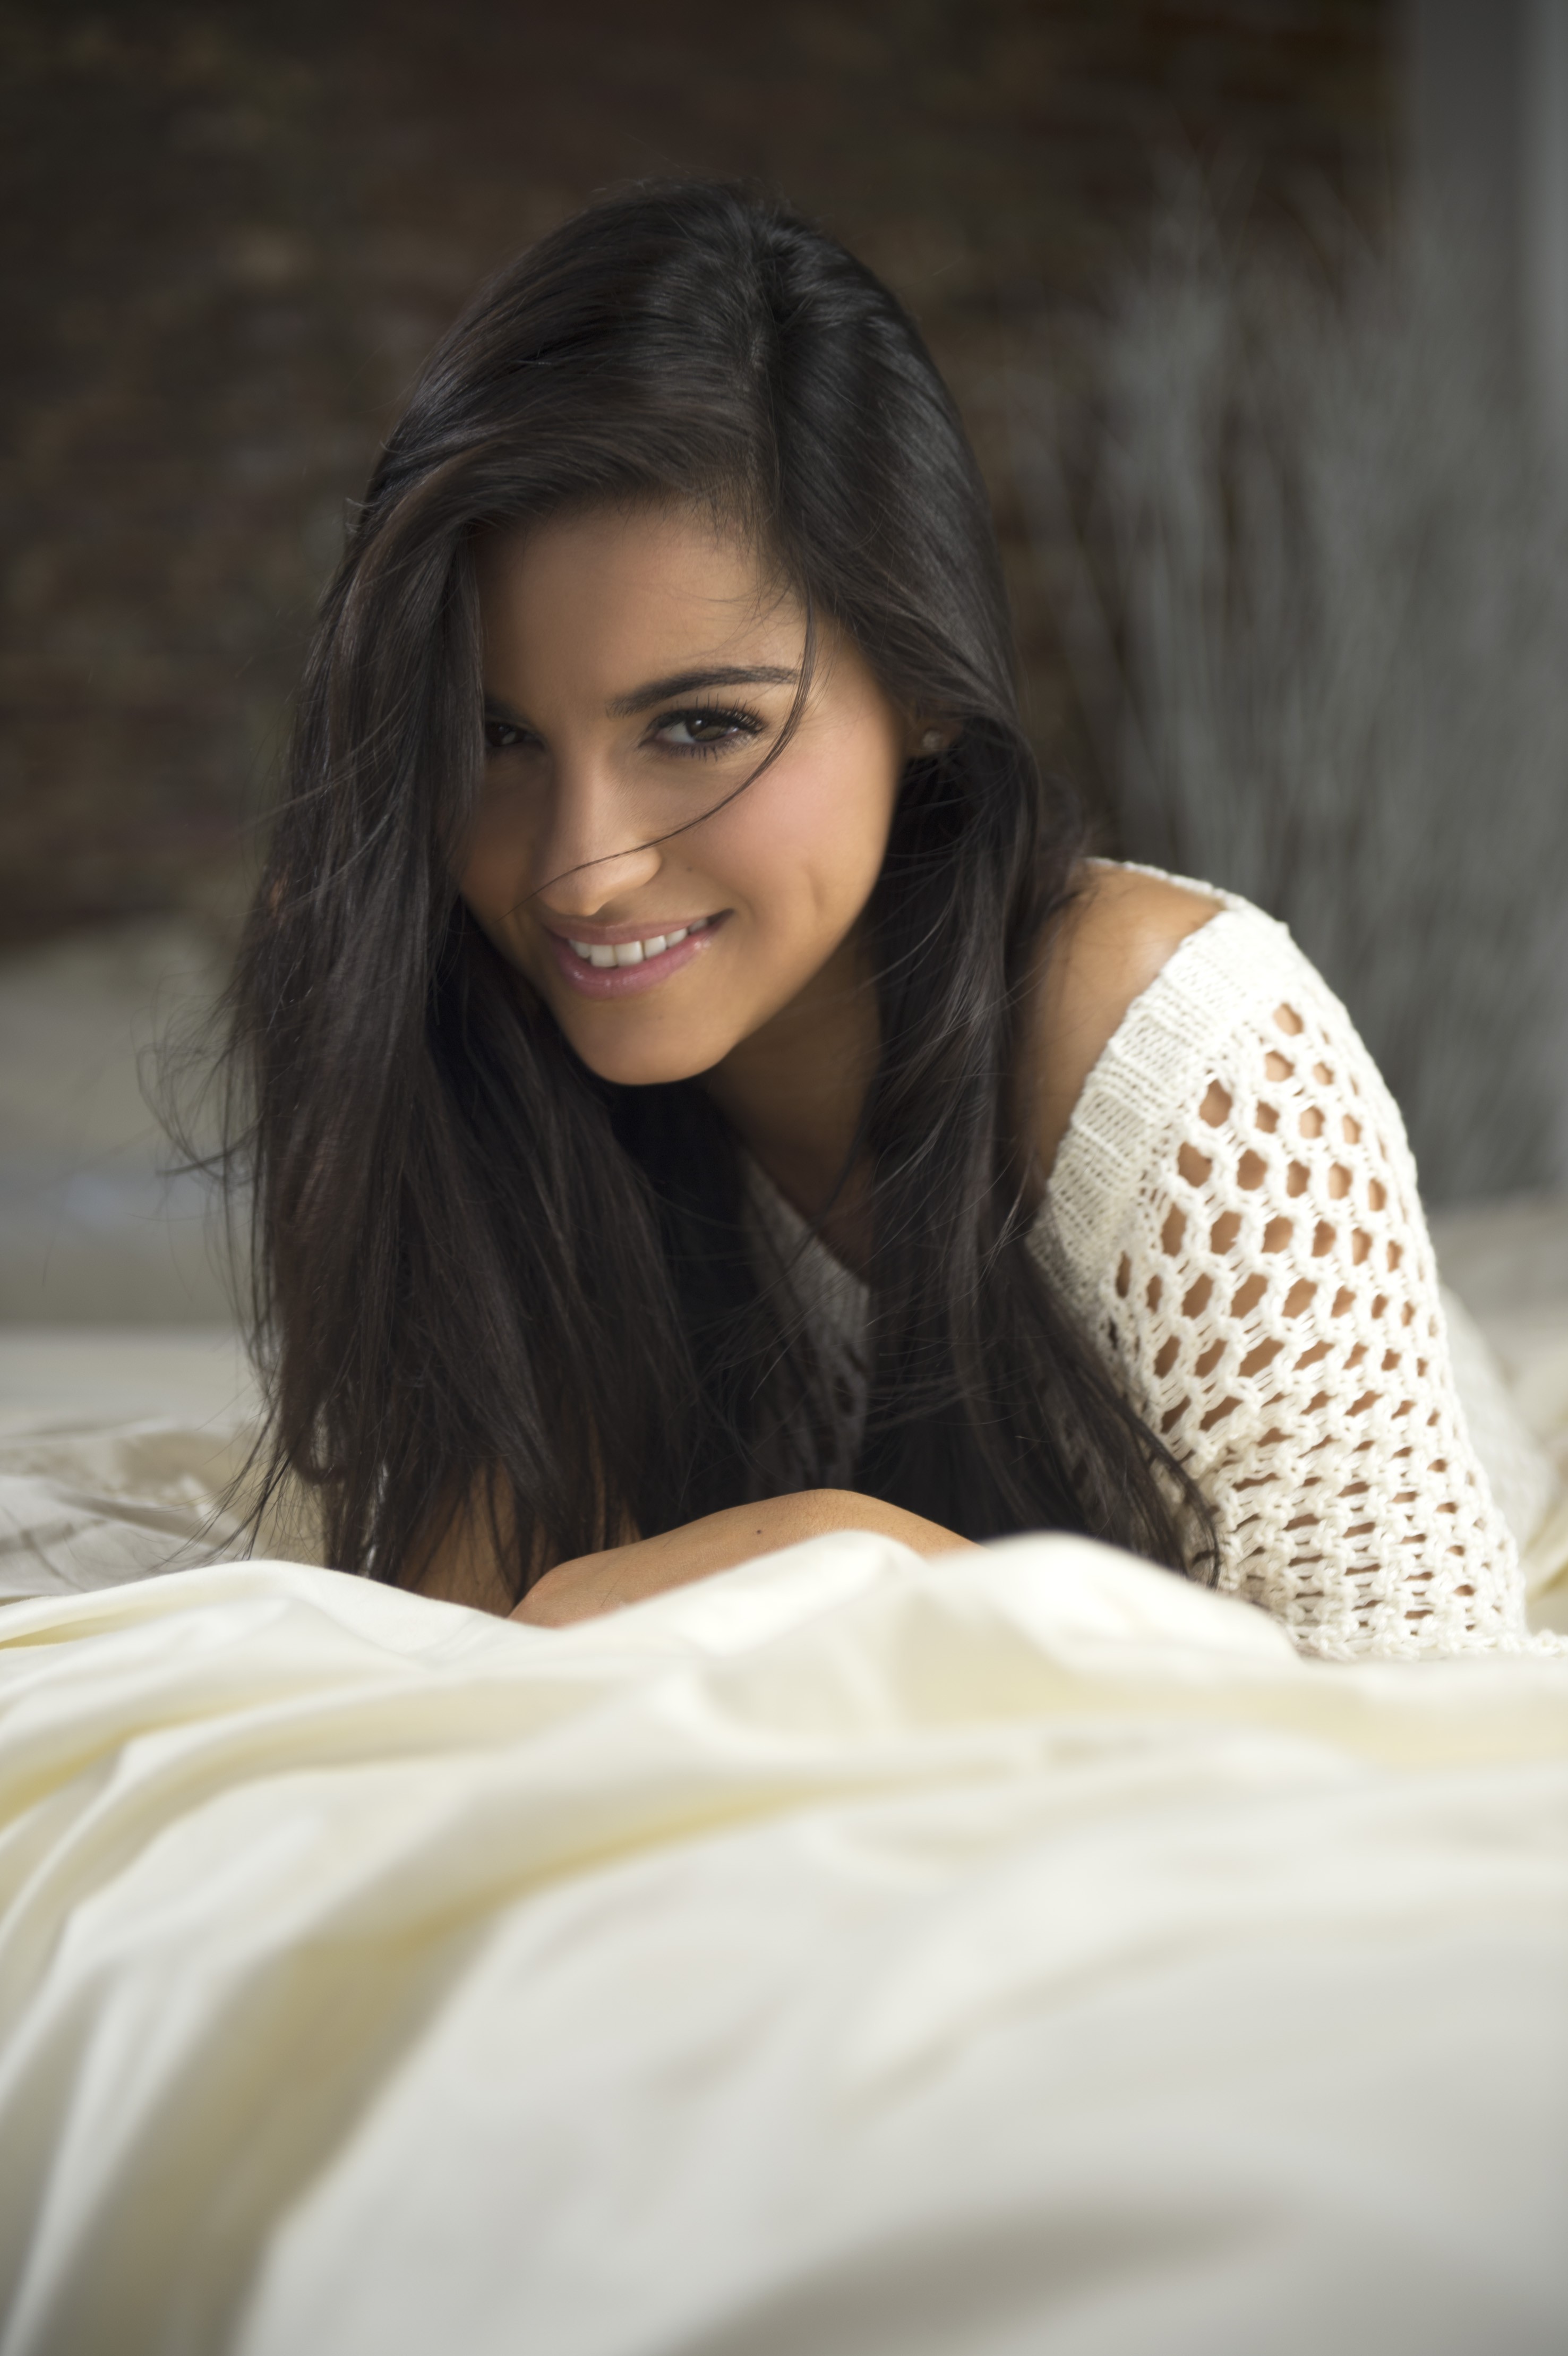 Maite Perroni Latinas Women Mexican Mexican Model Black Hair White Sweater Long Hair Smiling Actress 2953x4436